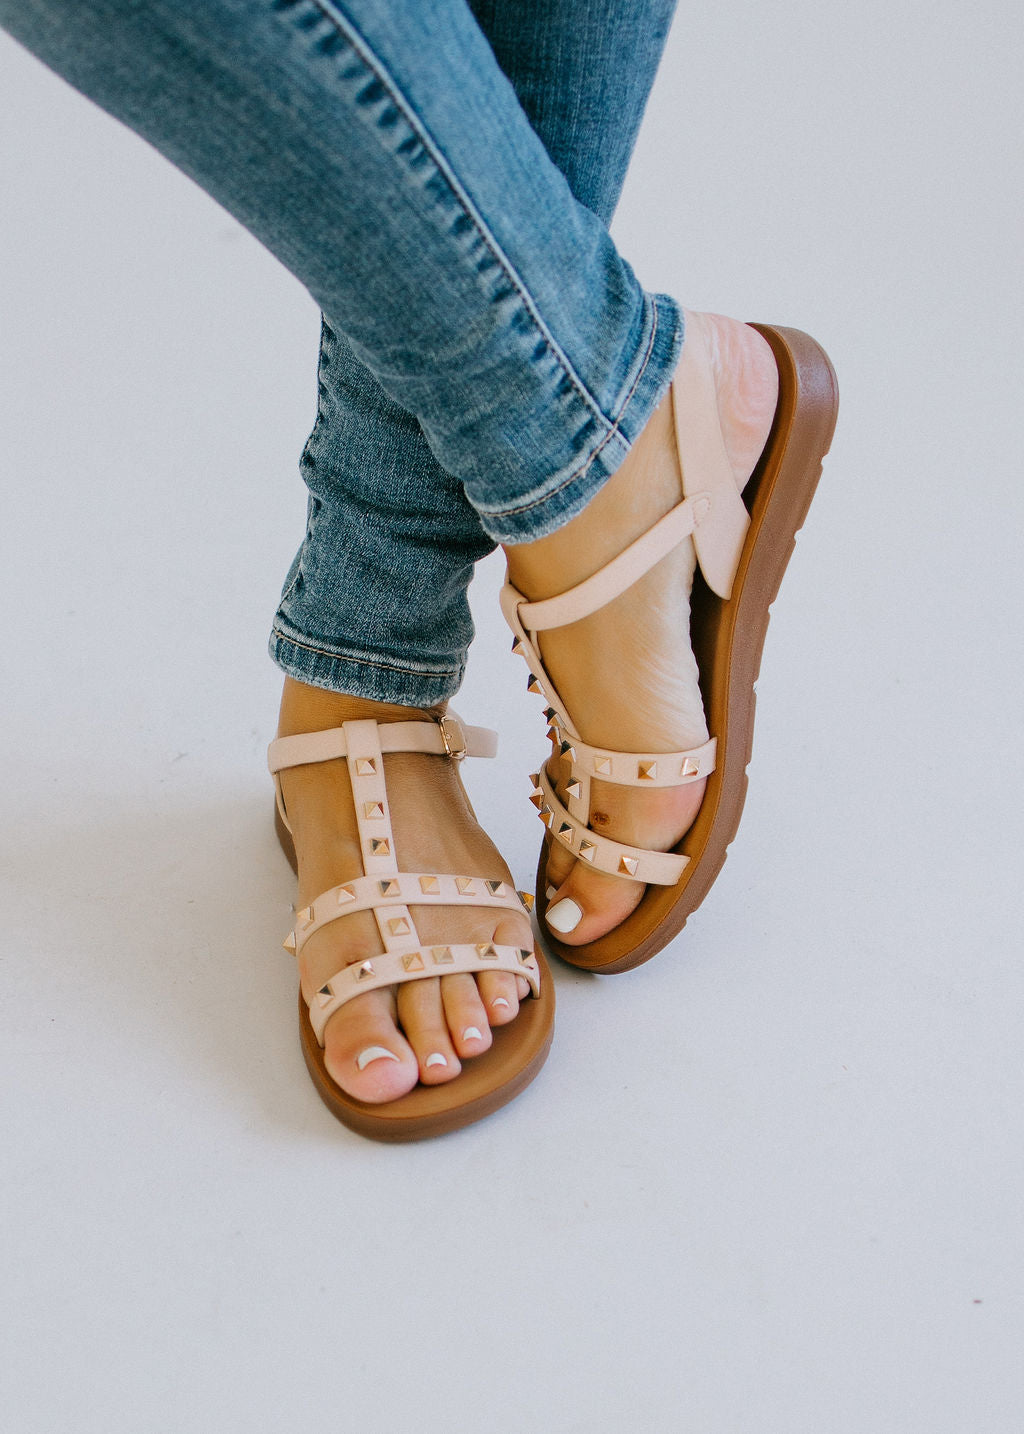 Melissa Studded Strap Sandal FINAL SALE